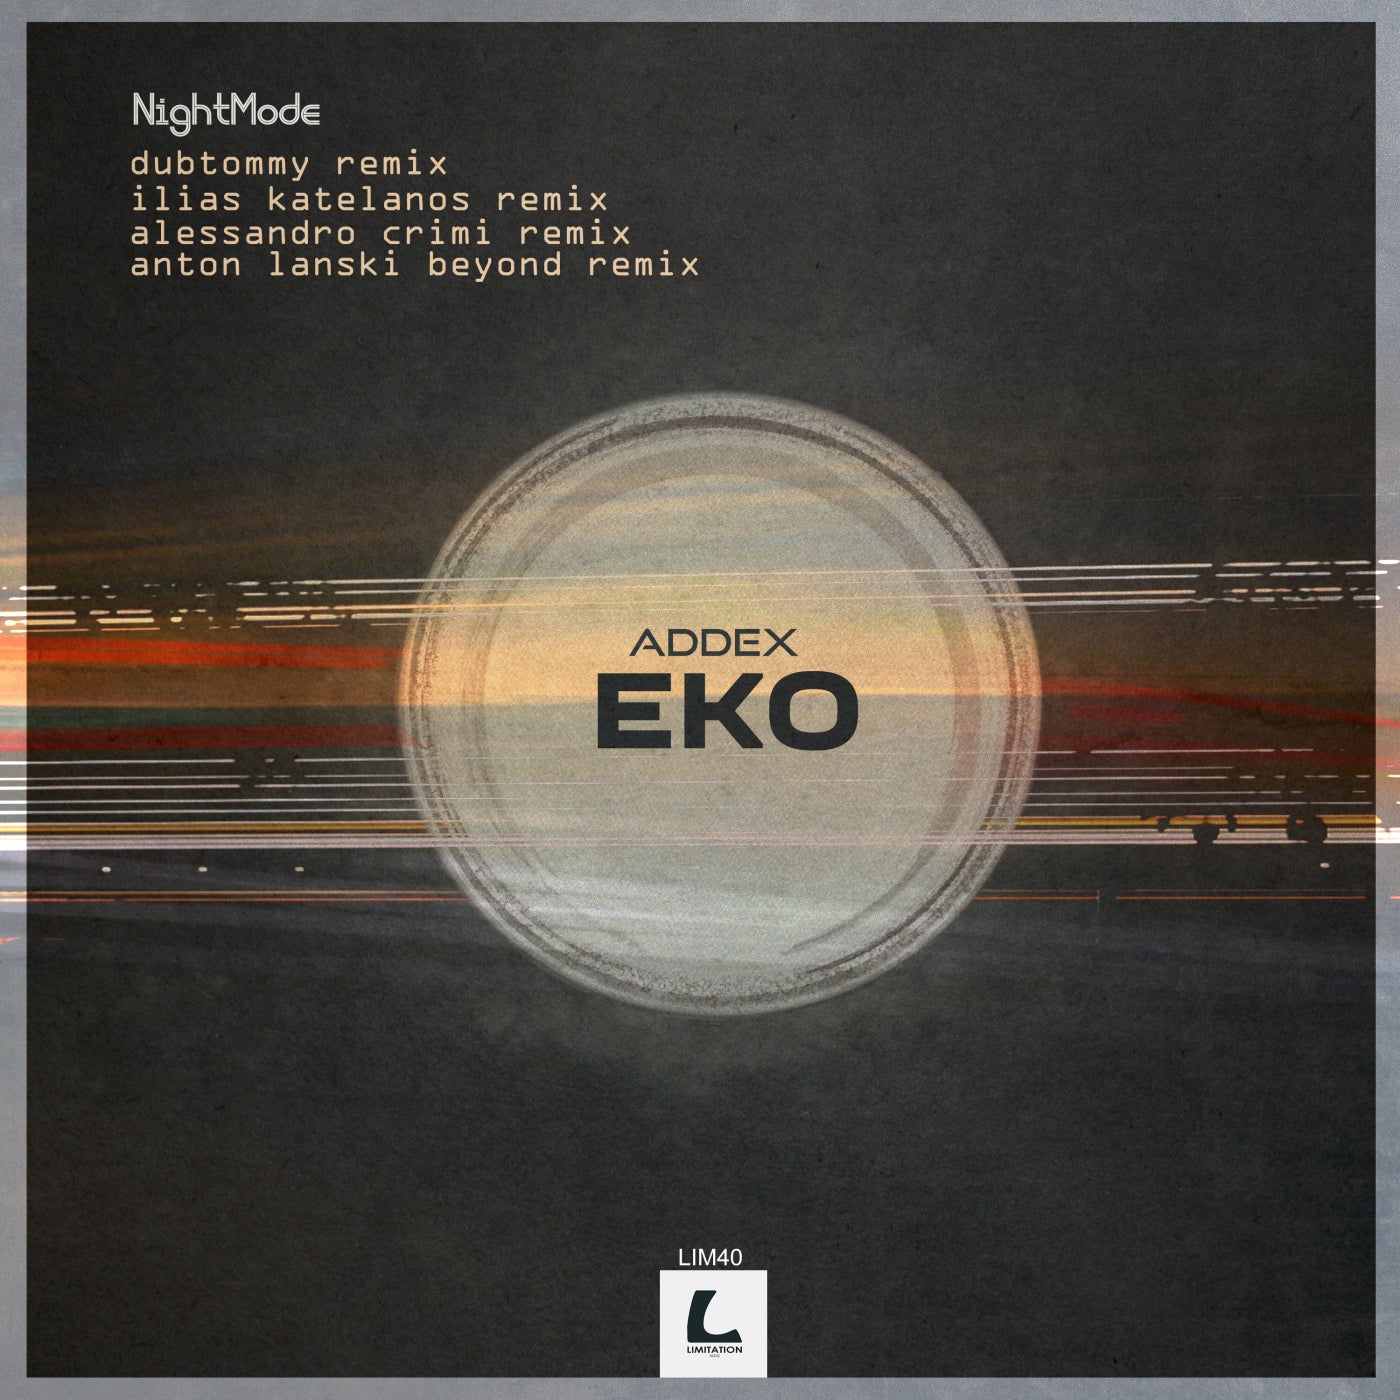 Addex – Eko (NightMode) [LIM40]